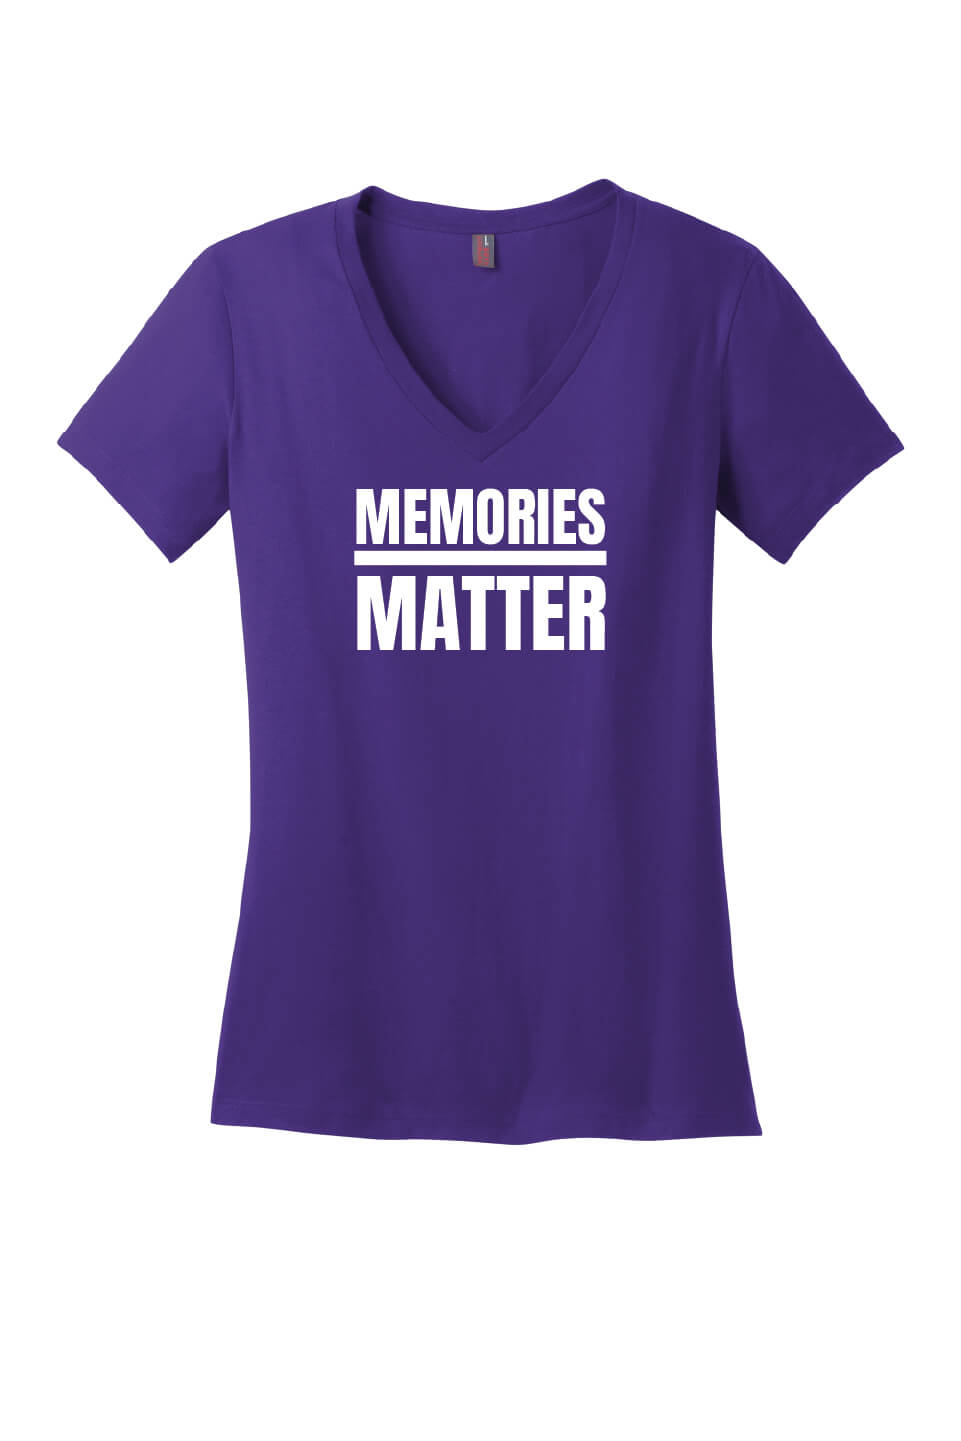 Memories Matter Flag Back Ladies V-Neck Short Sleeve T-Shirt purple front